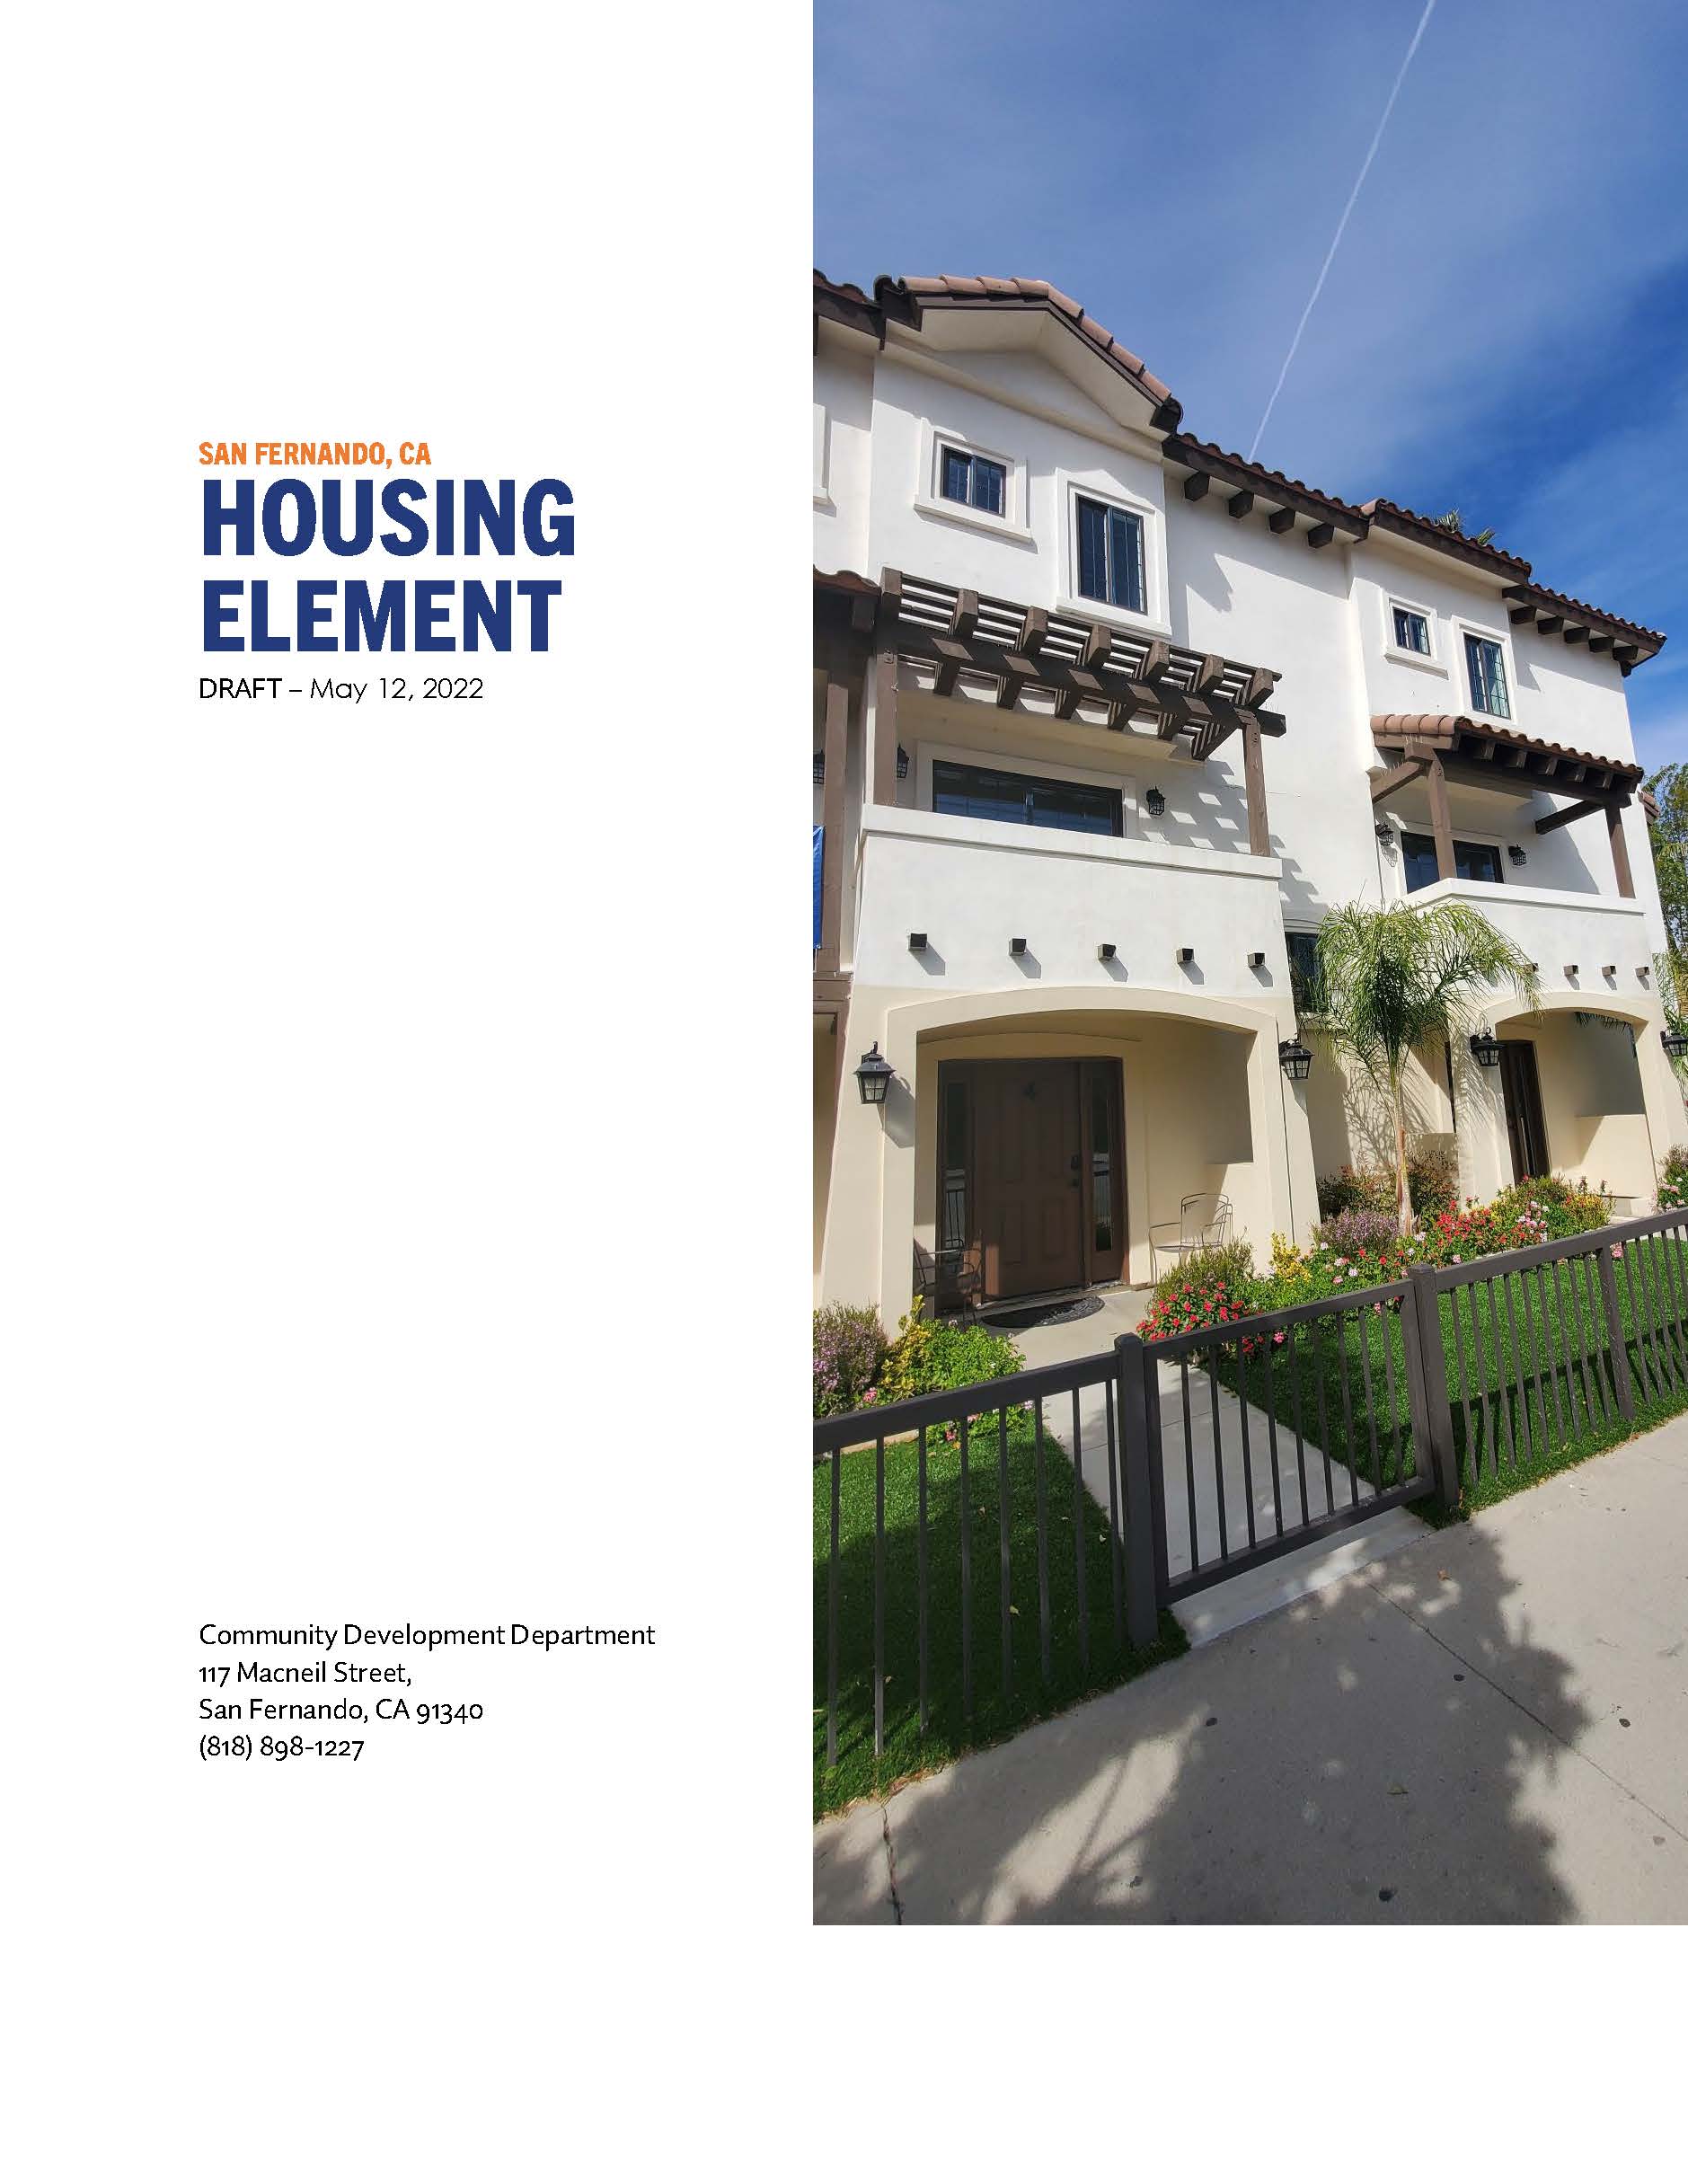 Photo of townhomes; San Fernando, CA Housing Element Draft - May 12, 2022, Community Development Department, 117 Macneil Street, San Fernando, CA 91340 (818) 898-1227